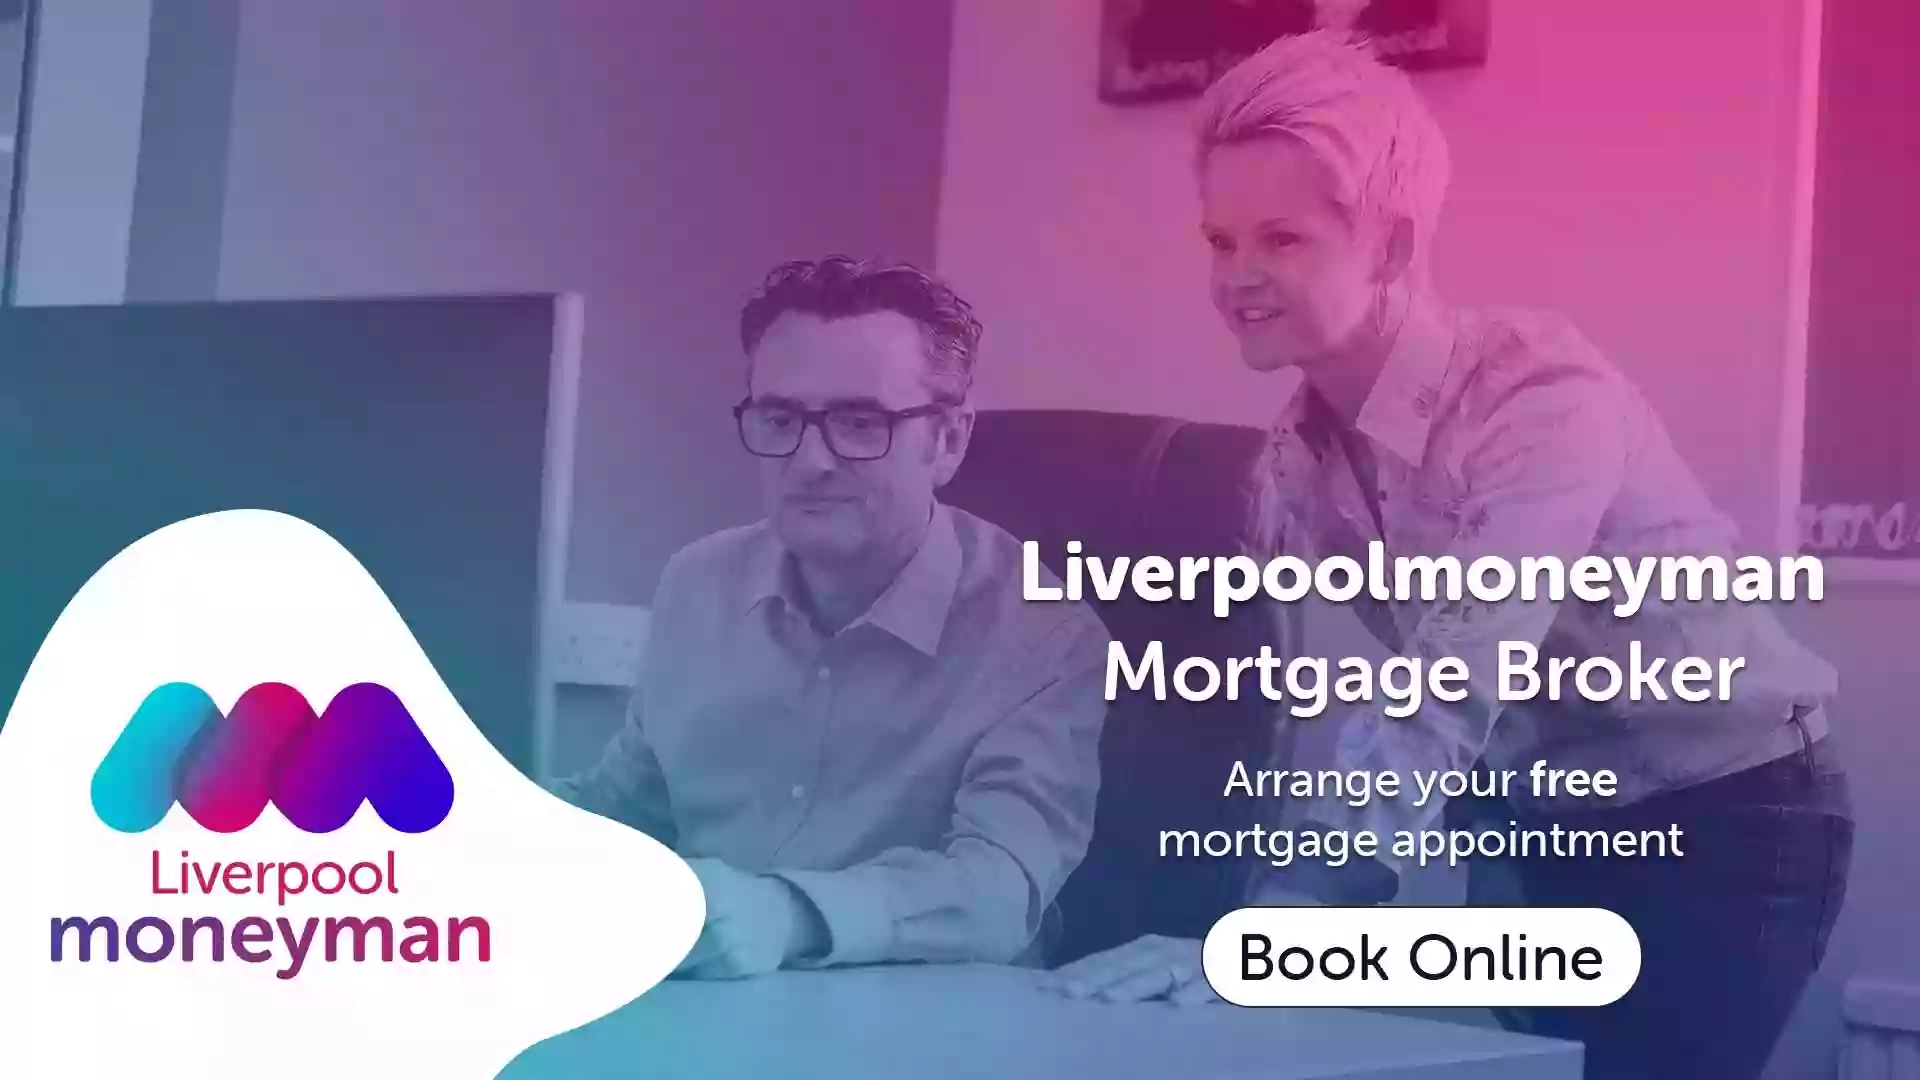 Liverpoolmoneyman - Mortgage Broker